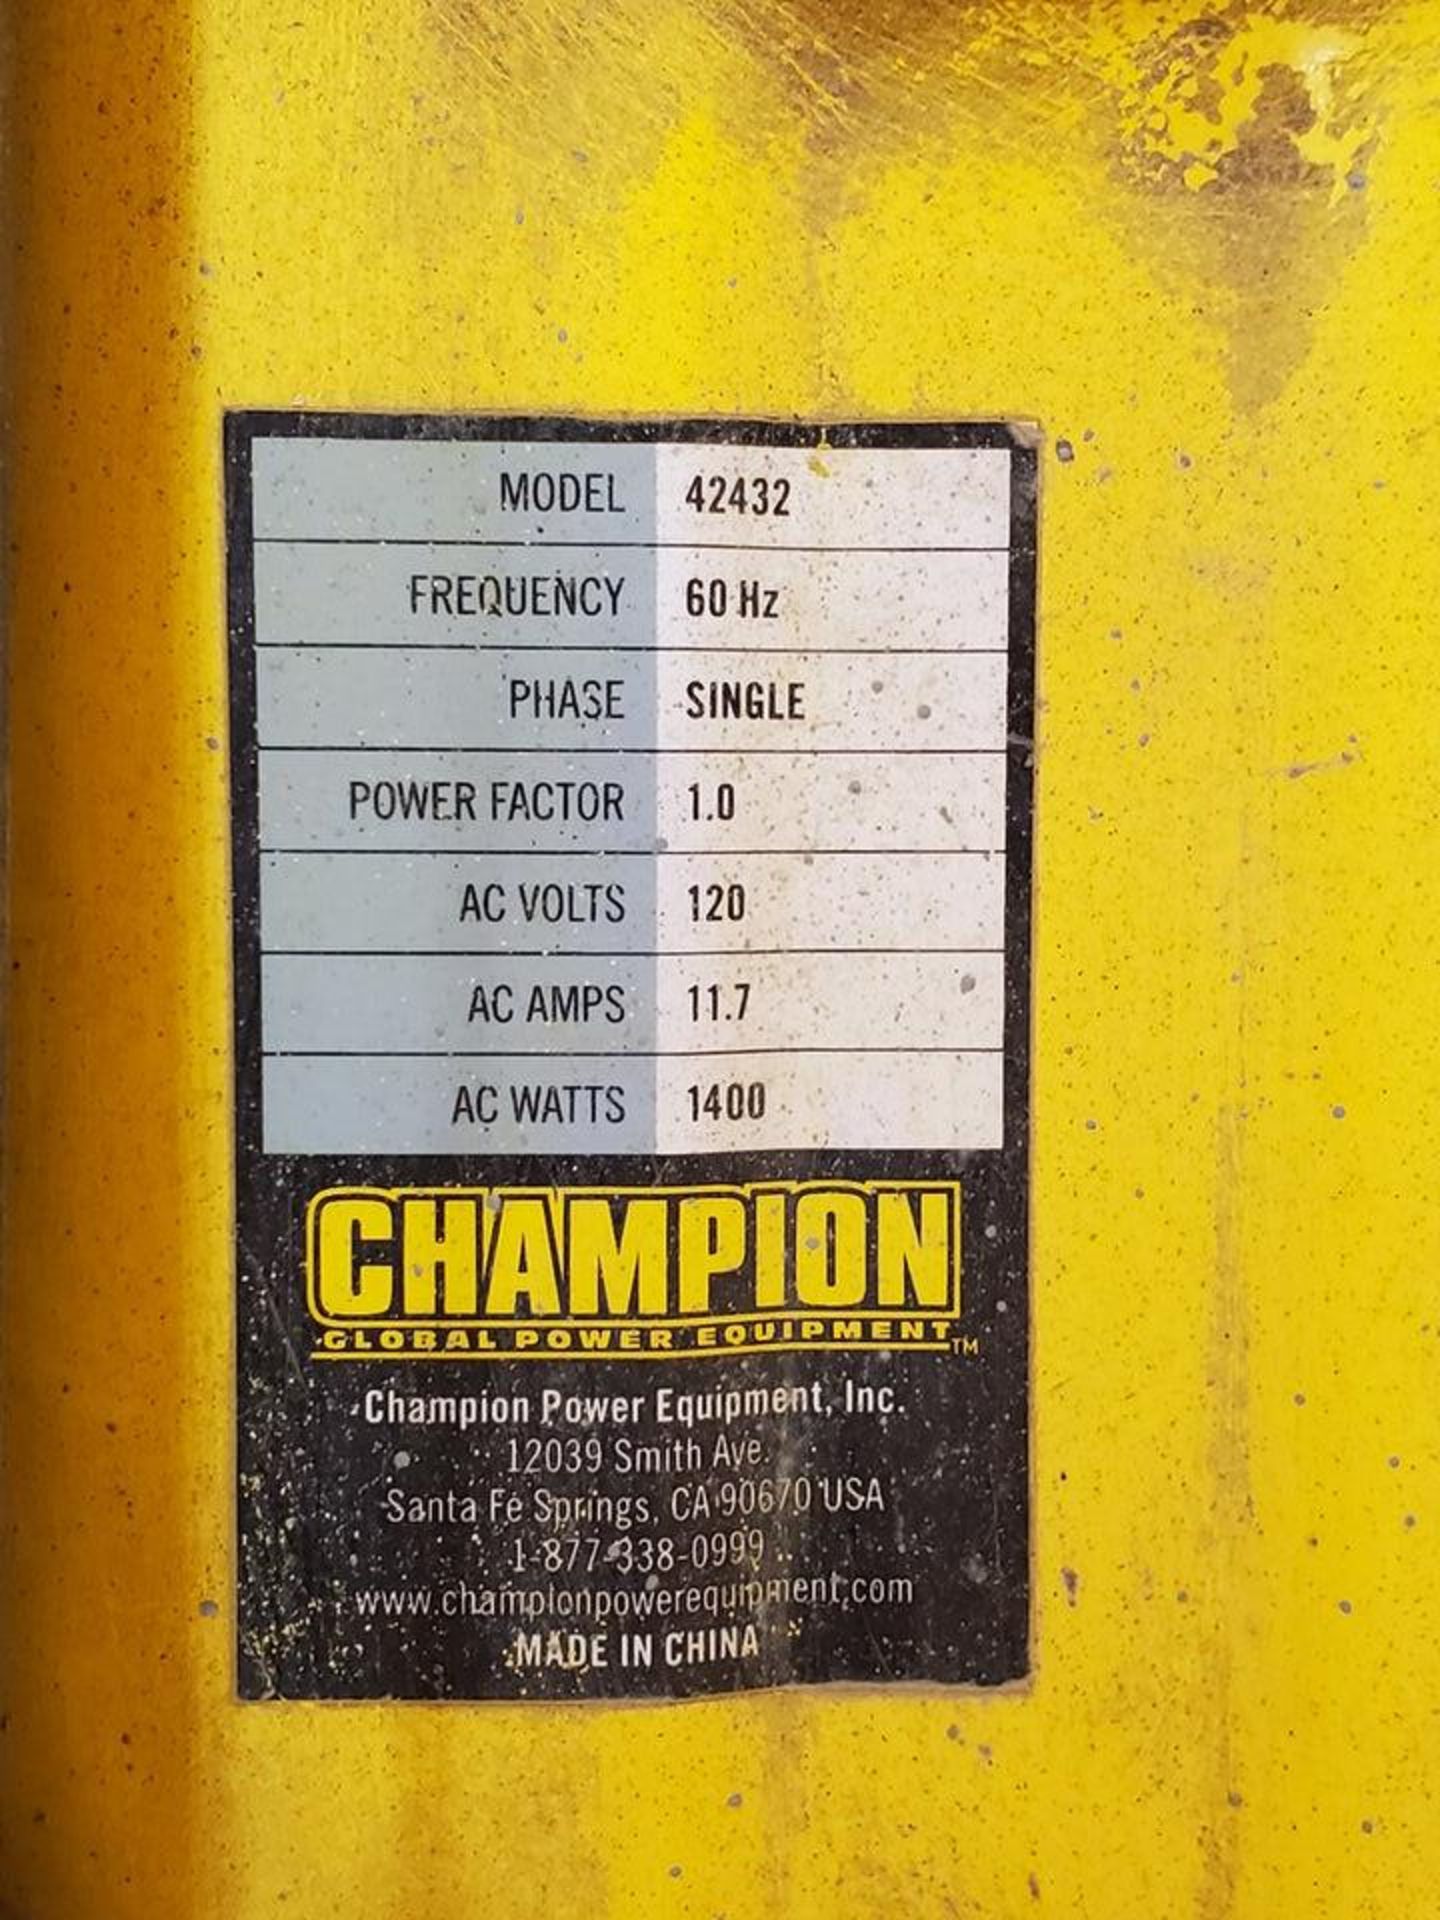 Champion 42432 Portable Generator 1400W, W/ 80cc Engine, 1PH, 60HZ, 120V, 11.7A - Image 7 of 7